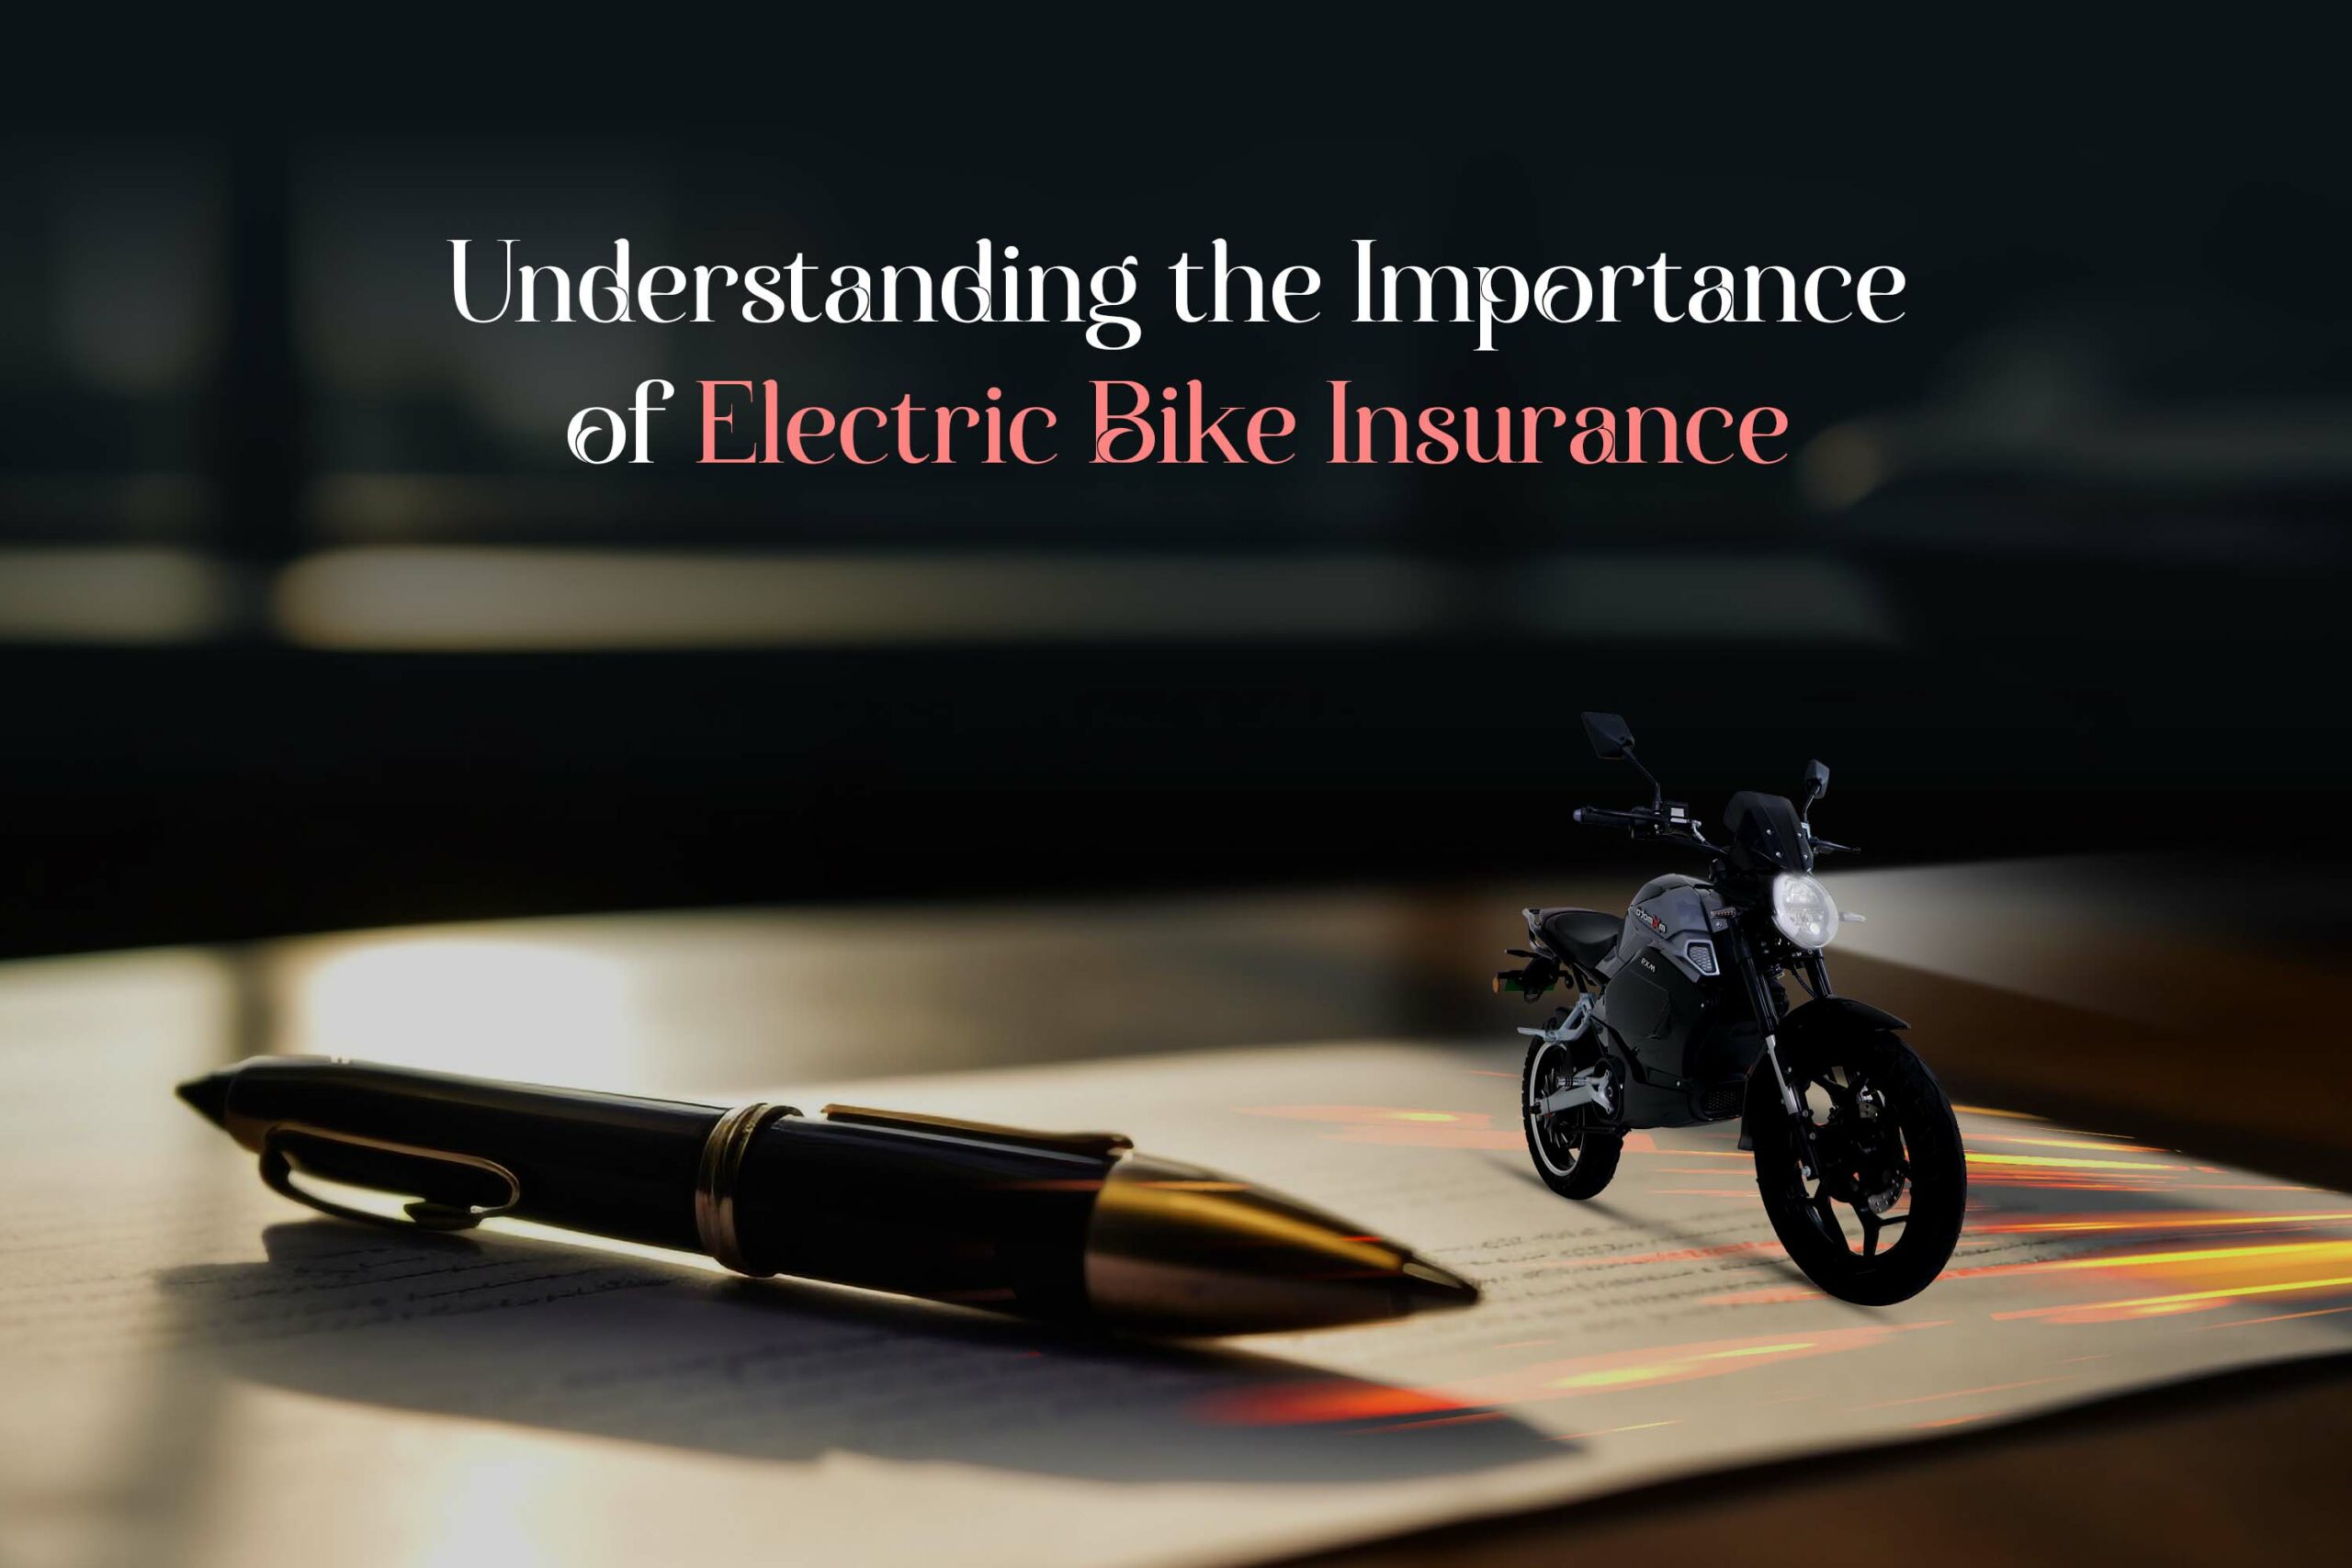 Electric Bike Insurance